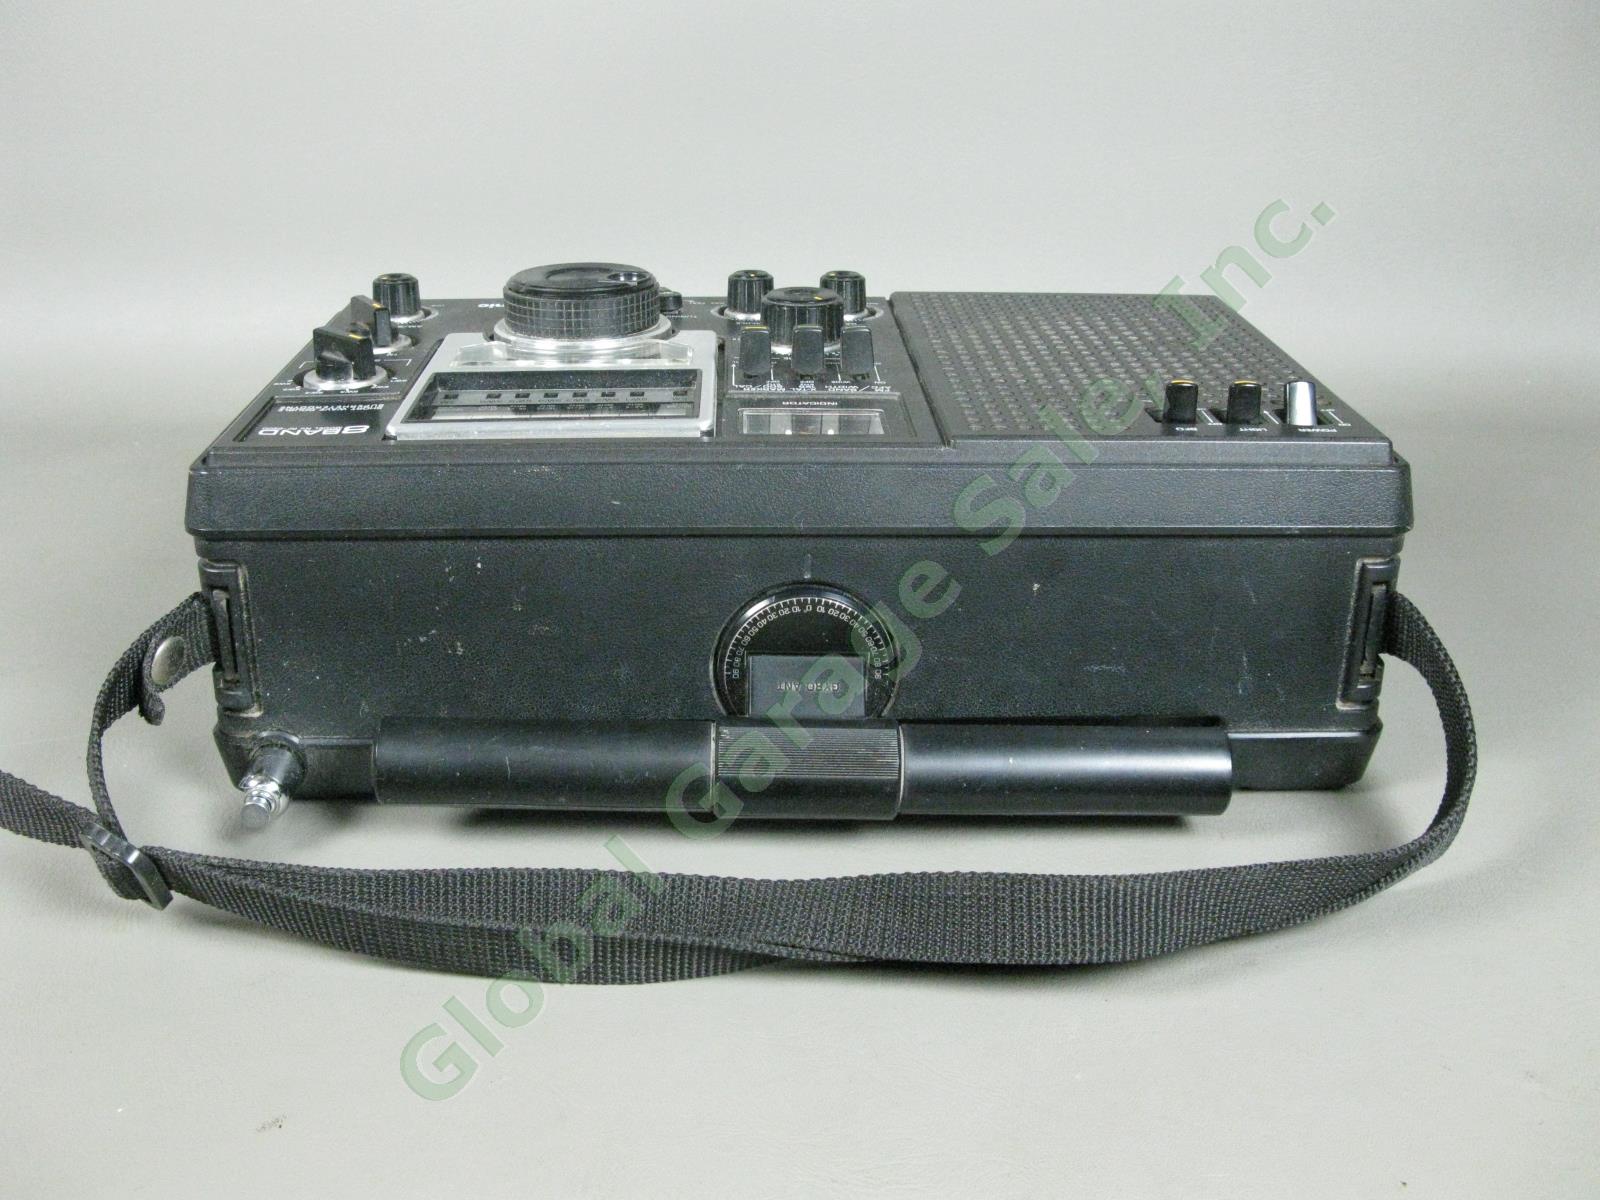 Panasonic RF2200 8-Band Short Wave AM FM Portable Radio Gyro Antenna Tested IWC 6